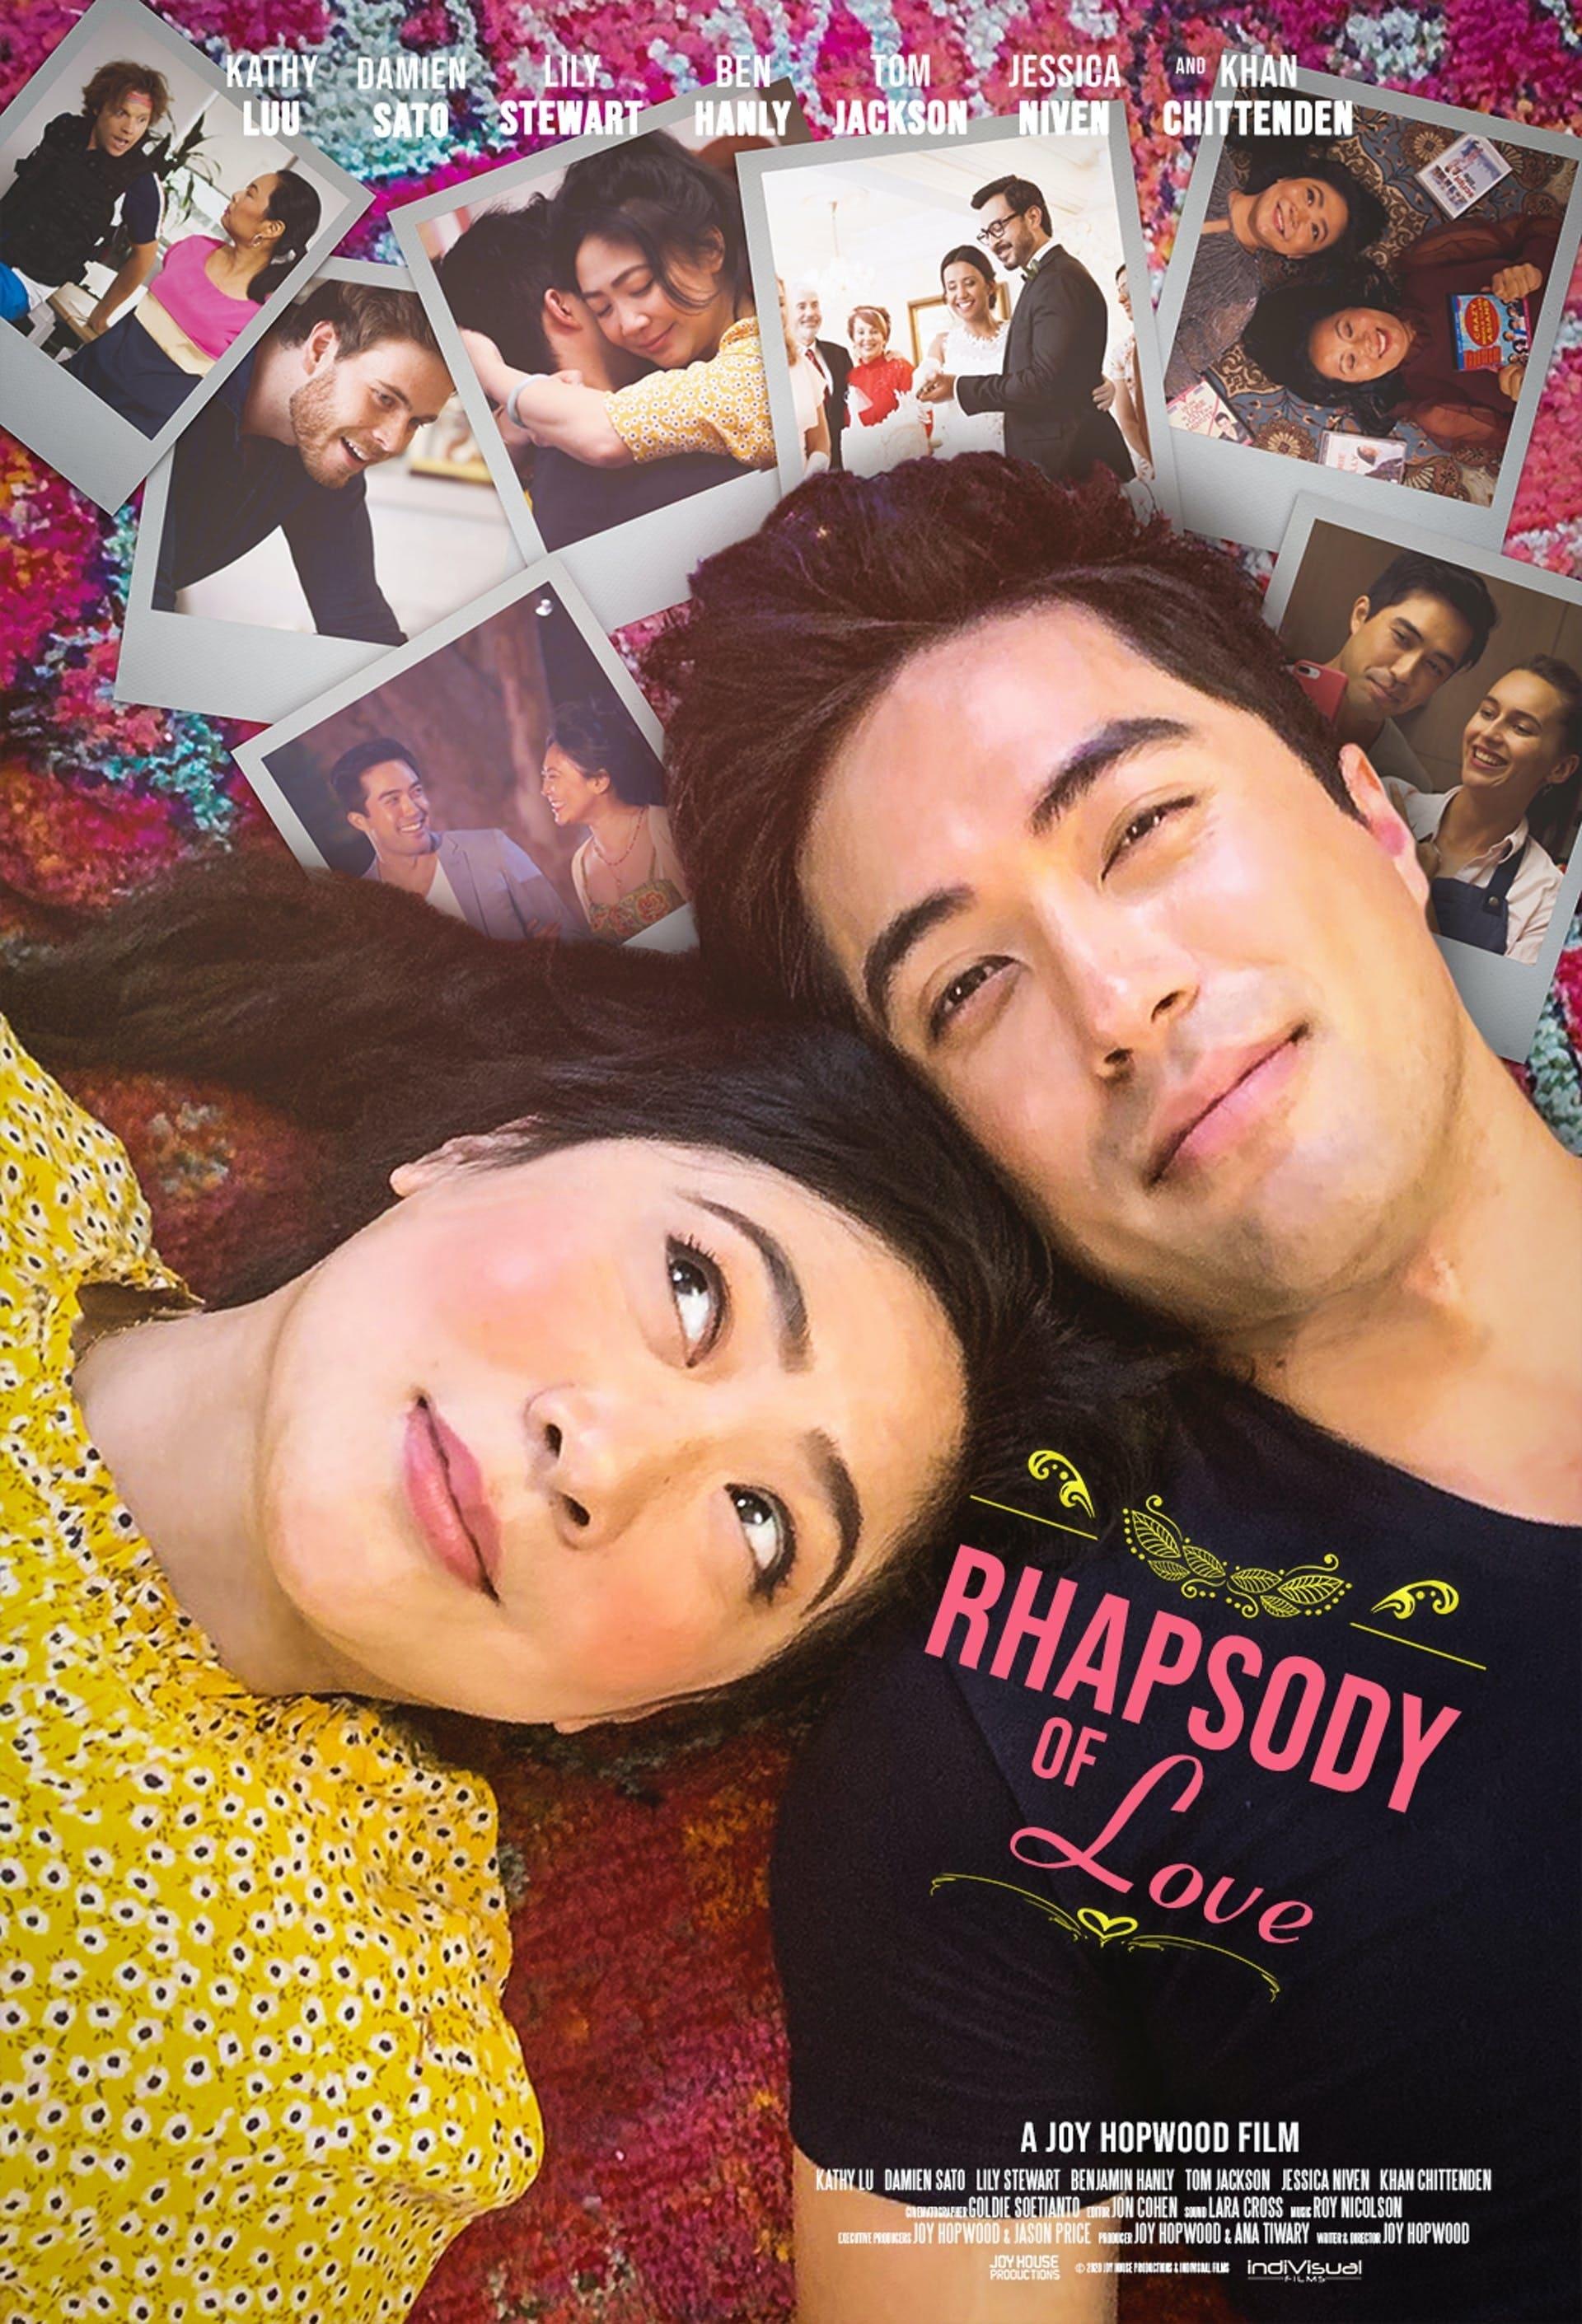 Rhapsody of Love poster